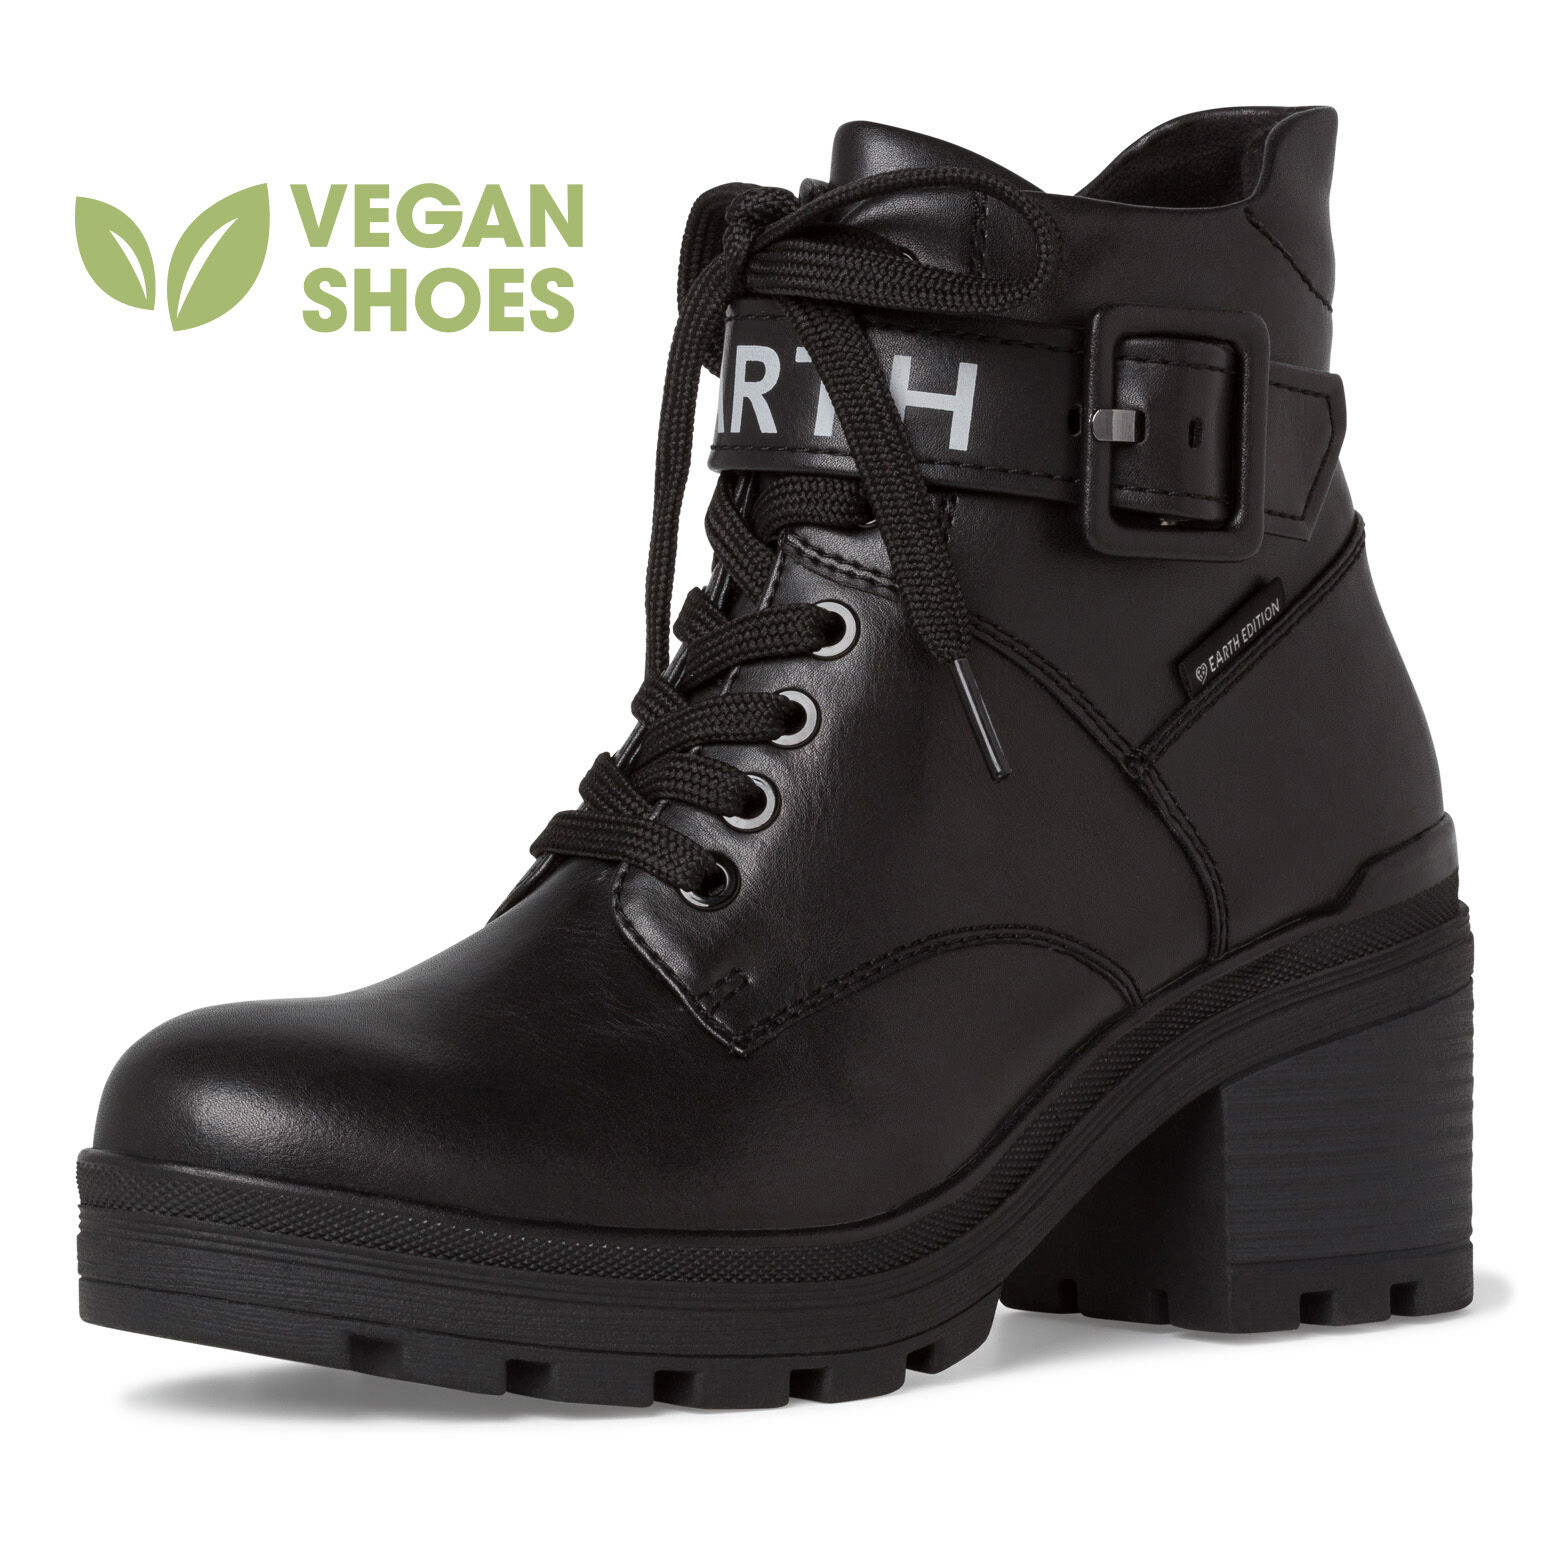 vegan shoes online